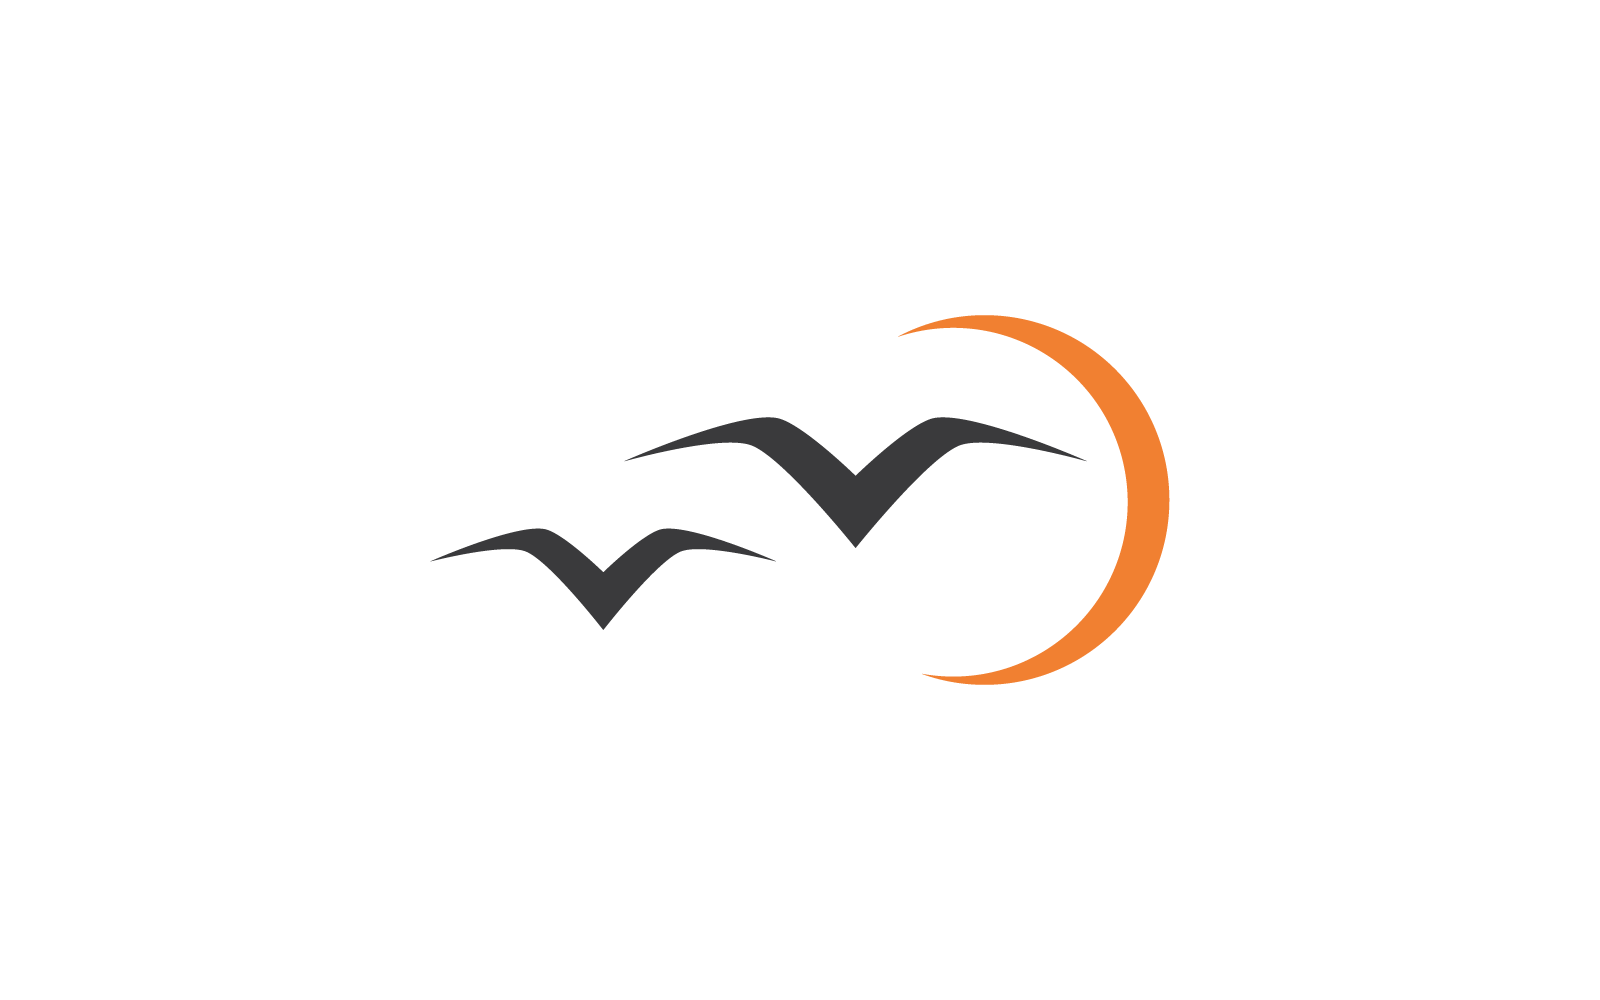 Seagull logo illustration vector template